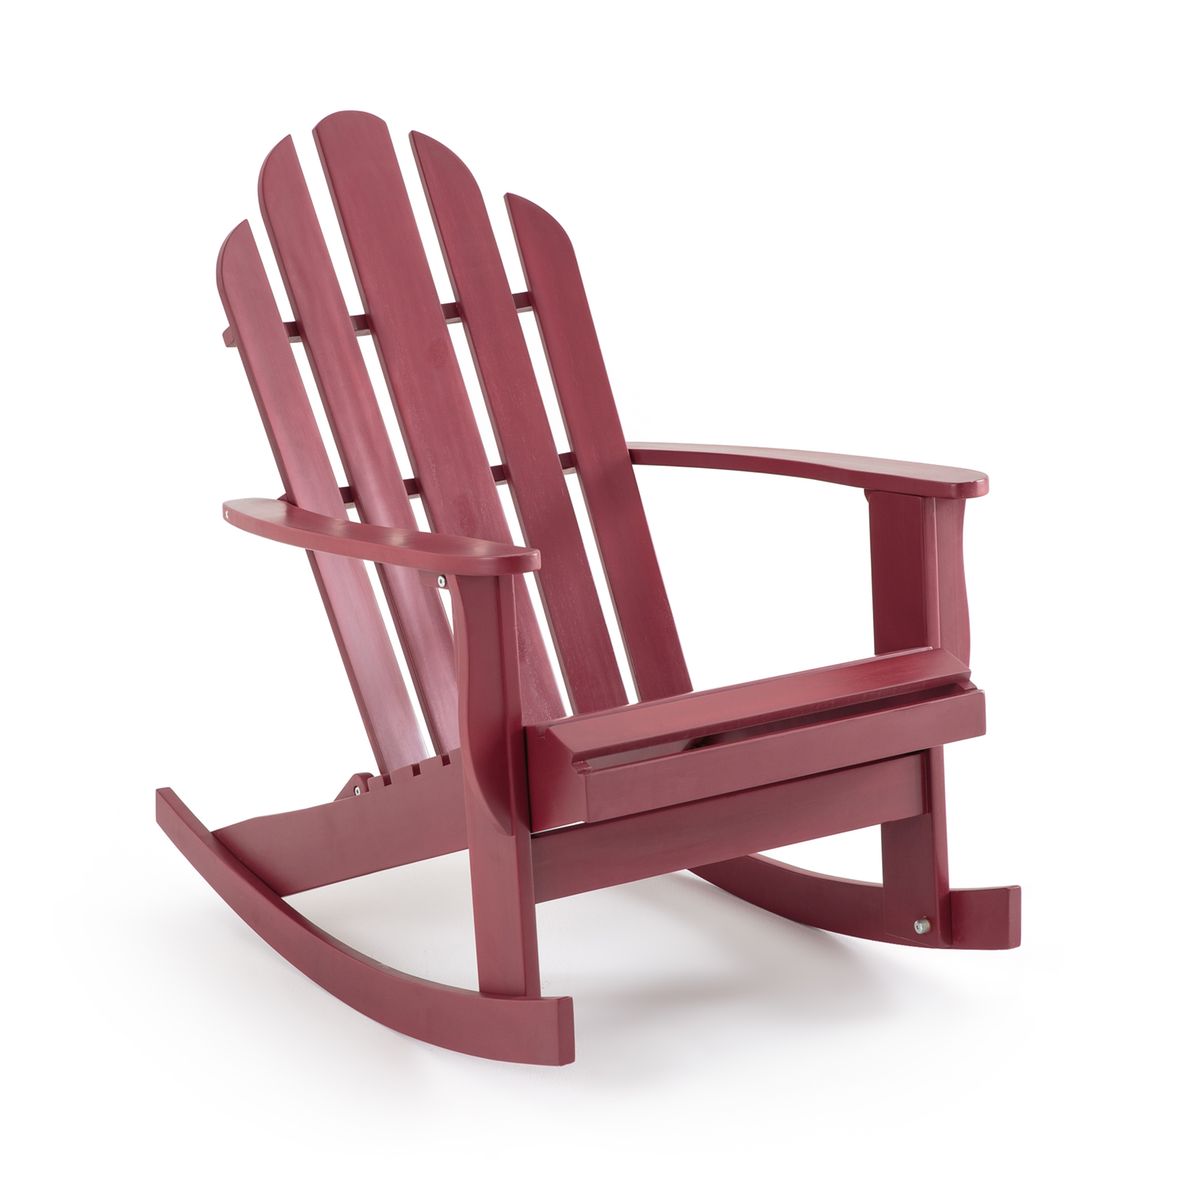 Rocking chair de jardin Théodore, style Adirondack